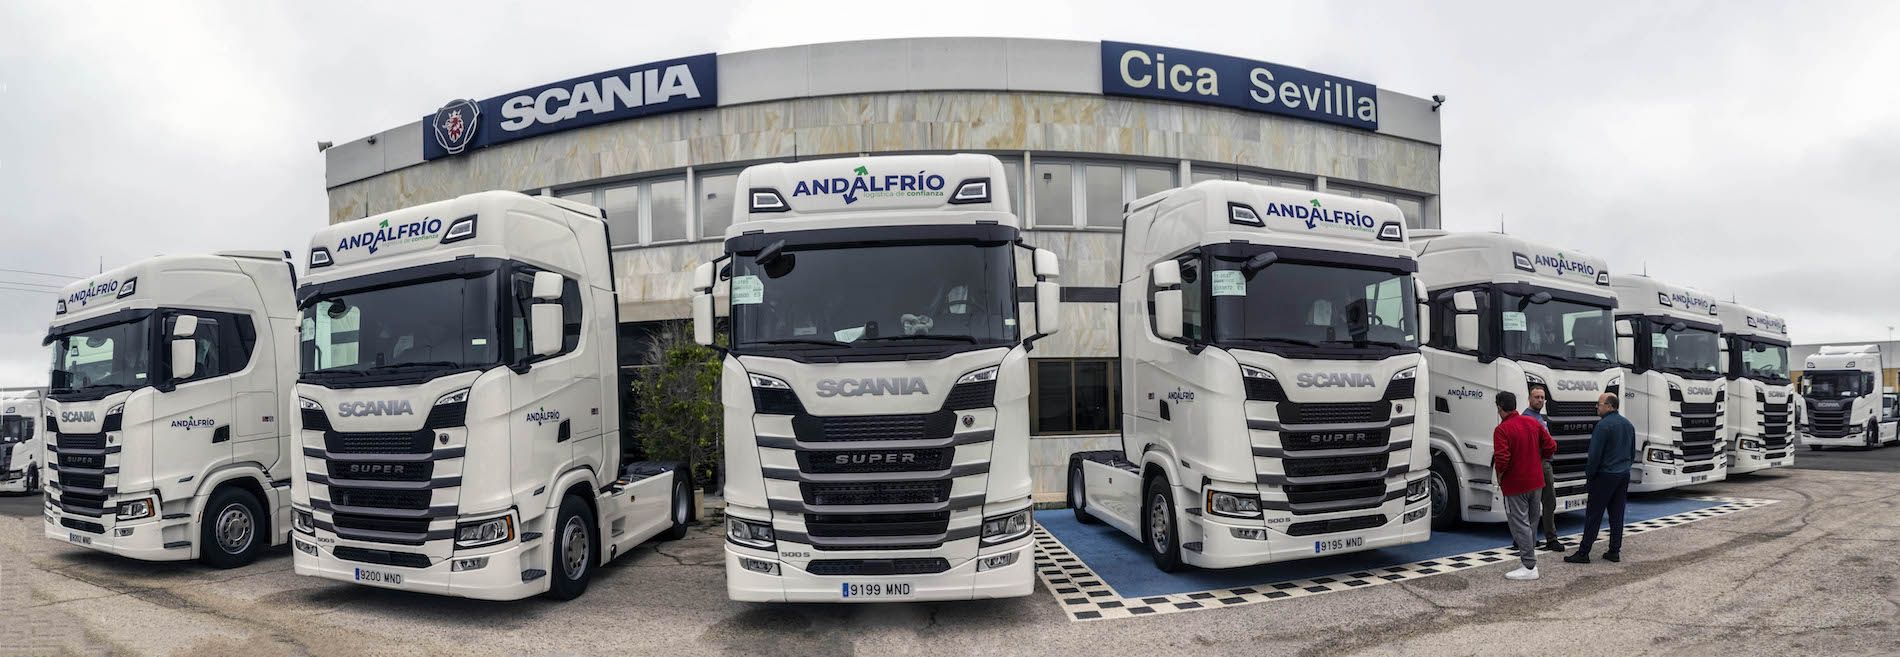 Camiones Scania Andalfrio